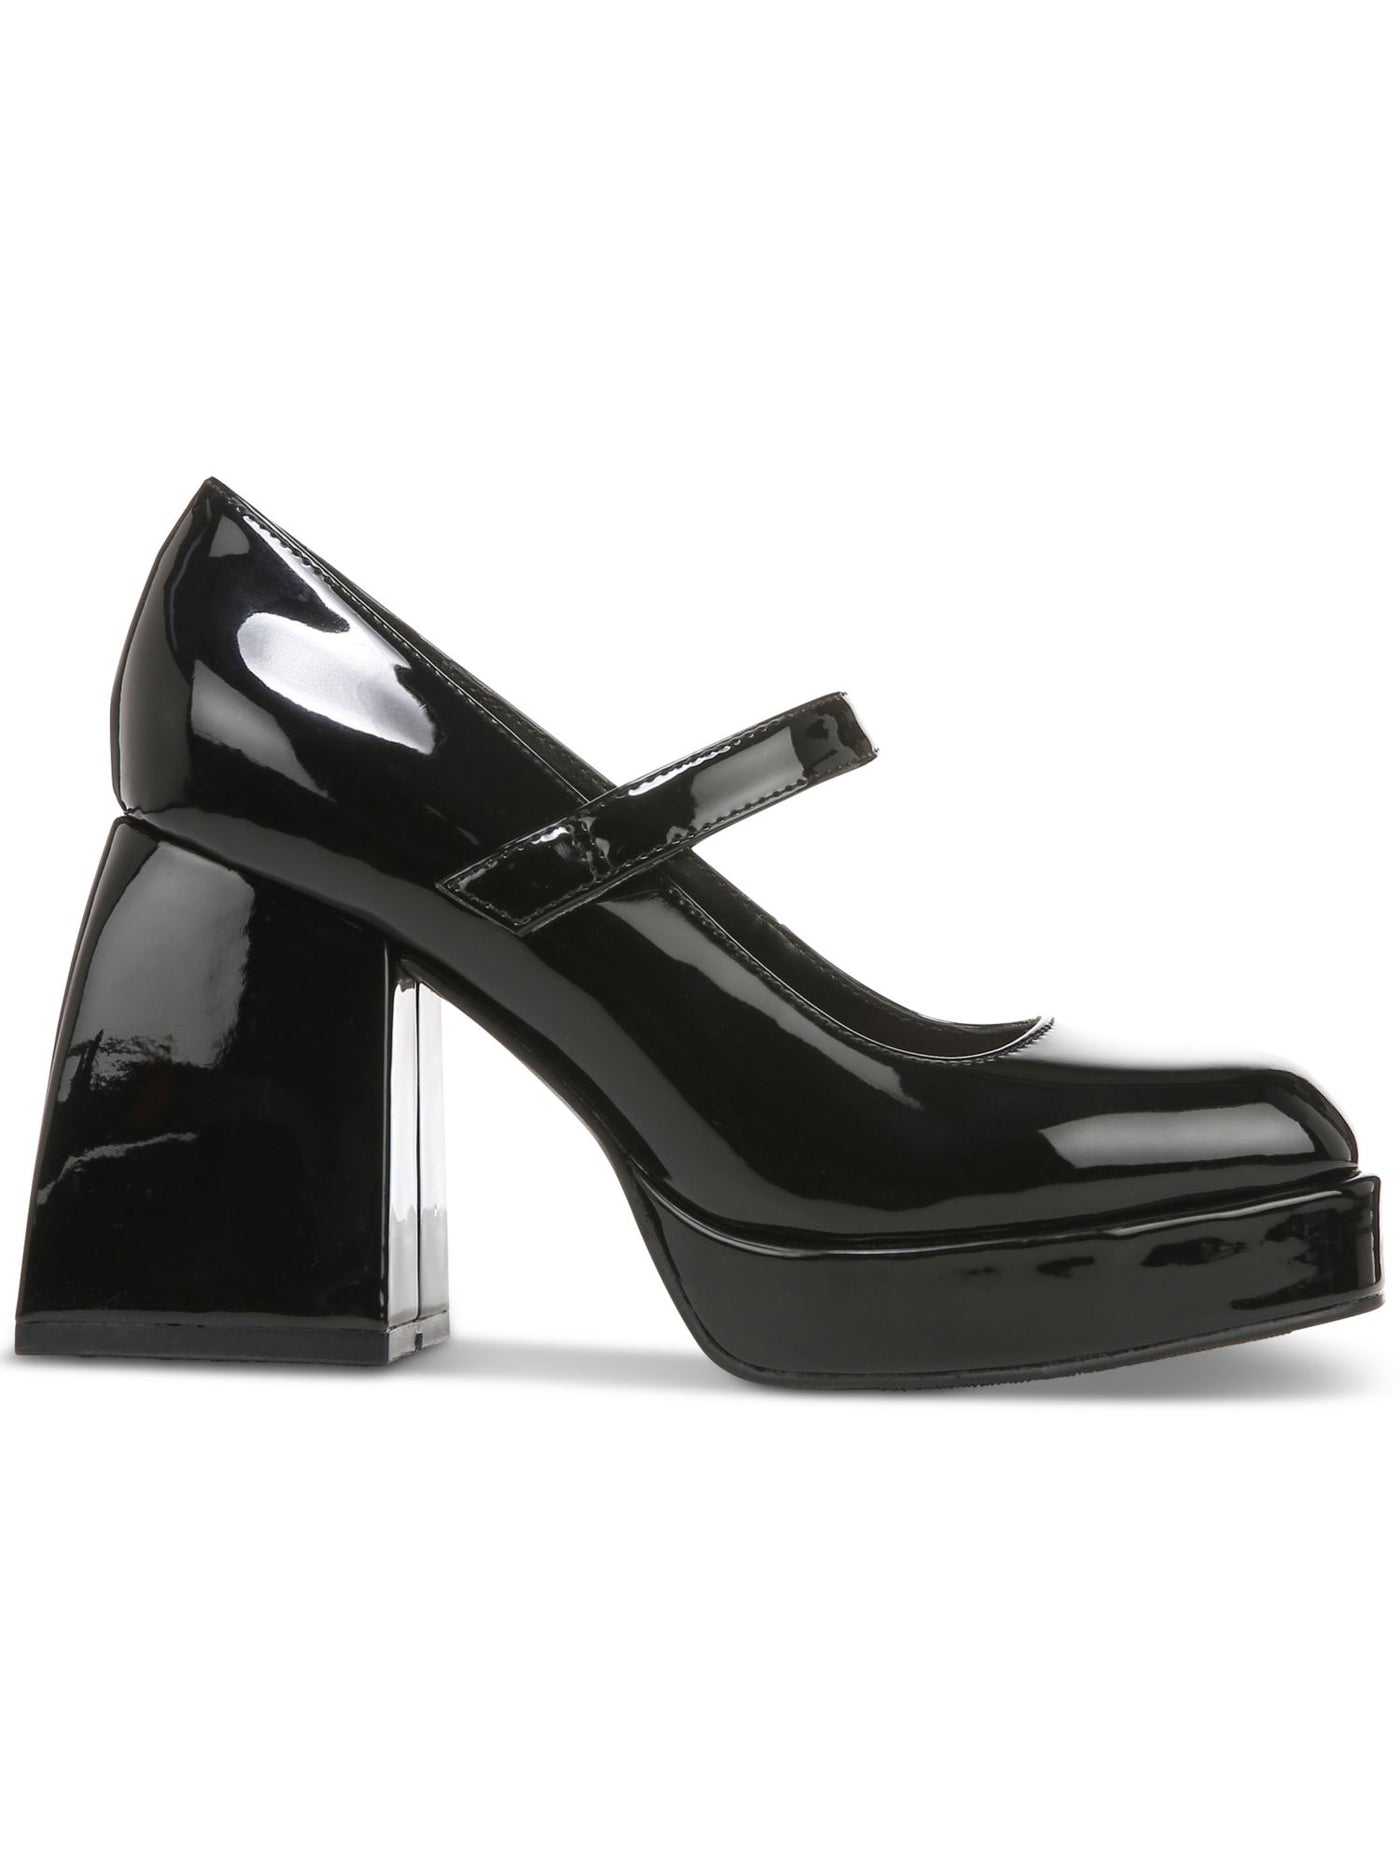 BAR III Womens Black Mary Jane Comfort Nexie Square Toe Flare Slip On Pumps Shoes 11 M